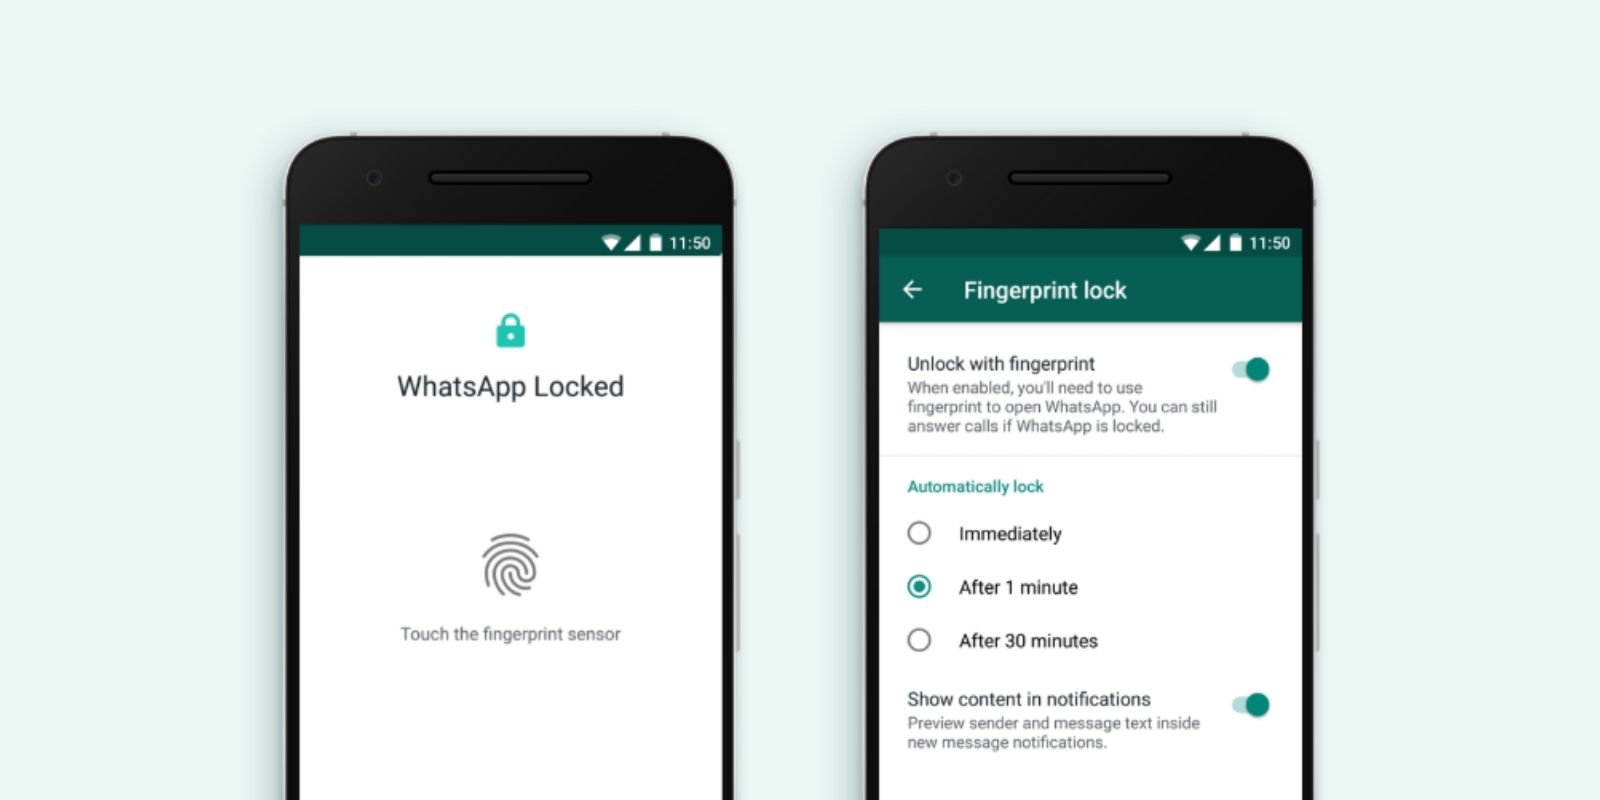 Featured image for WhatsApp fingerprint lock guide